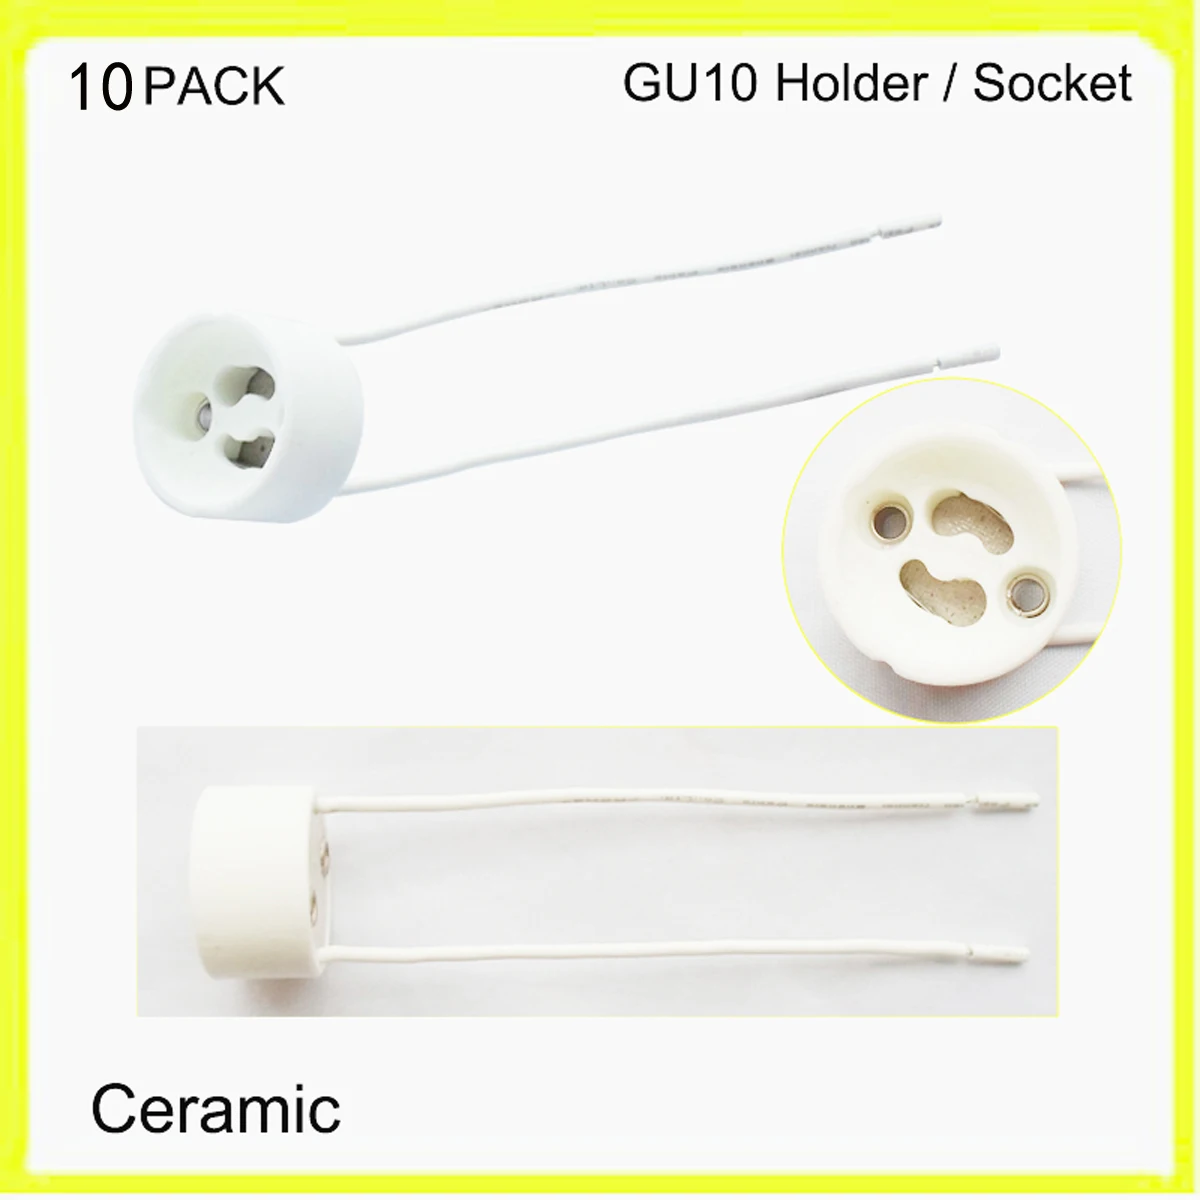 10 PACK Ceramic MR16 GU10 Holder Spotlight Accessories Socket GU5.3 Base 10cm Wires Light Fittings Free Shipping